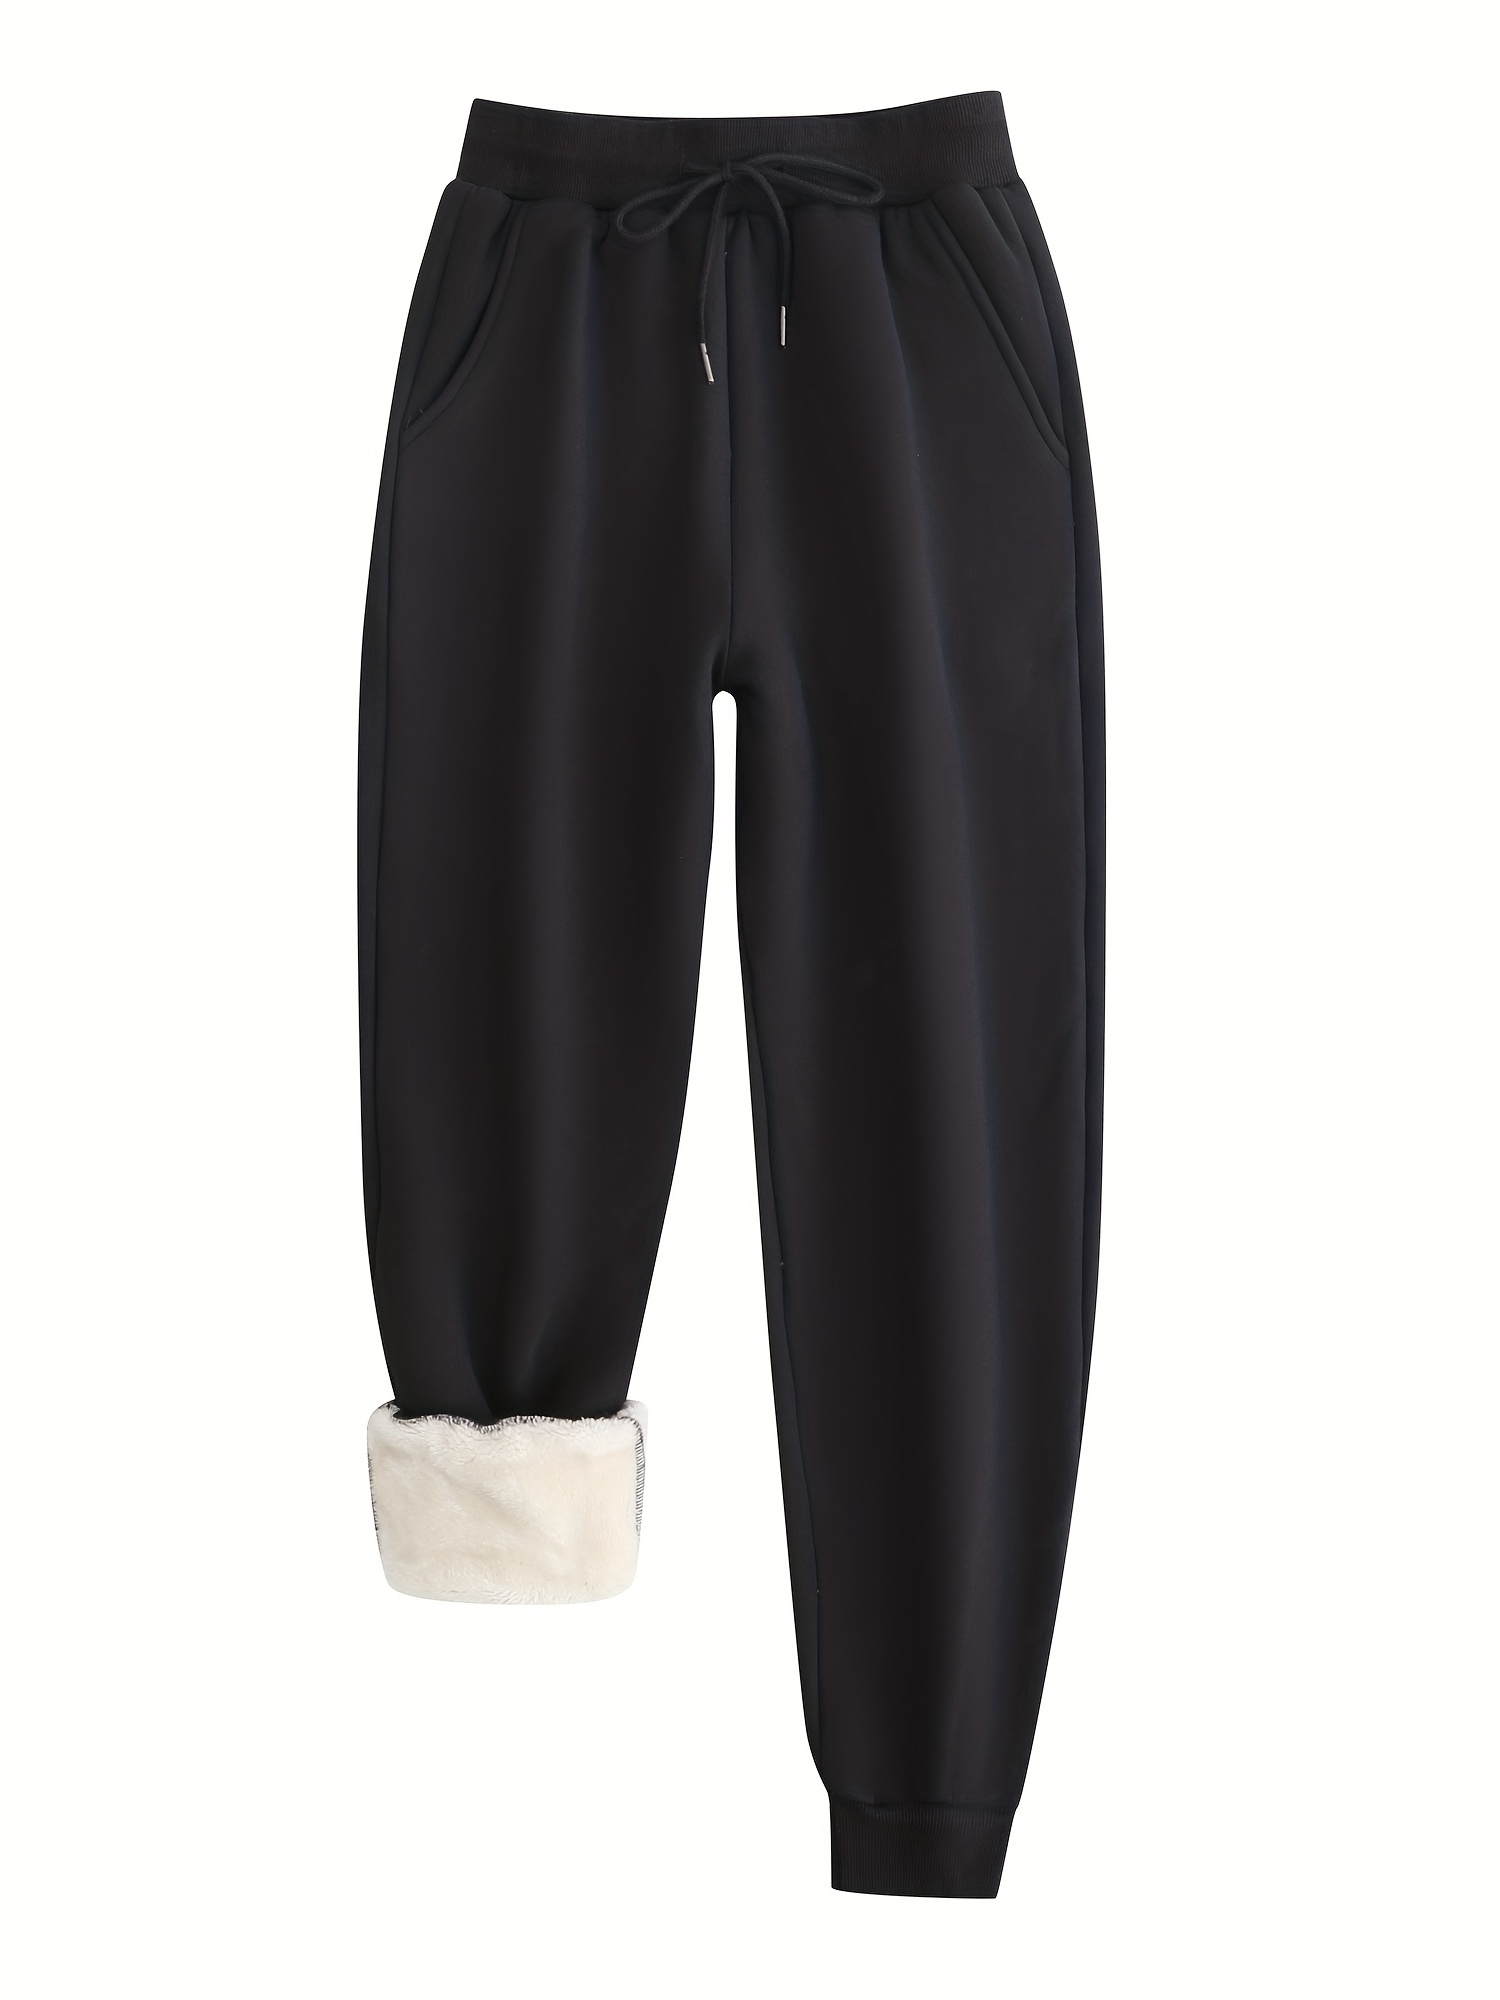 plush thermal pants, winter plush thermal pants casual drawstring pocket pants womens clothing details 21